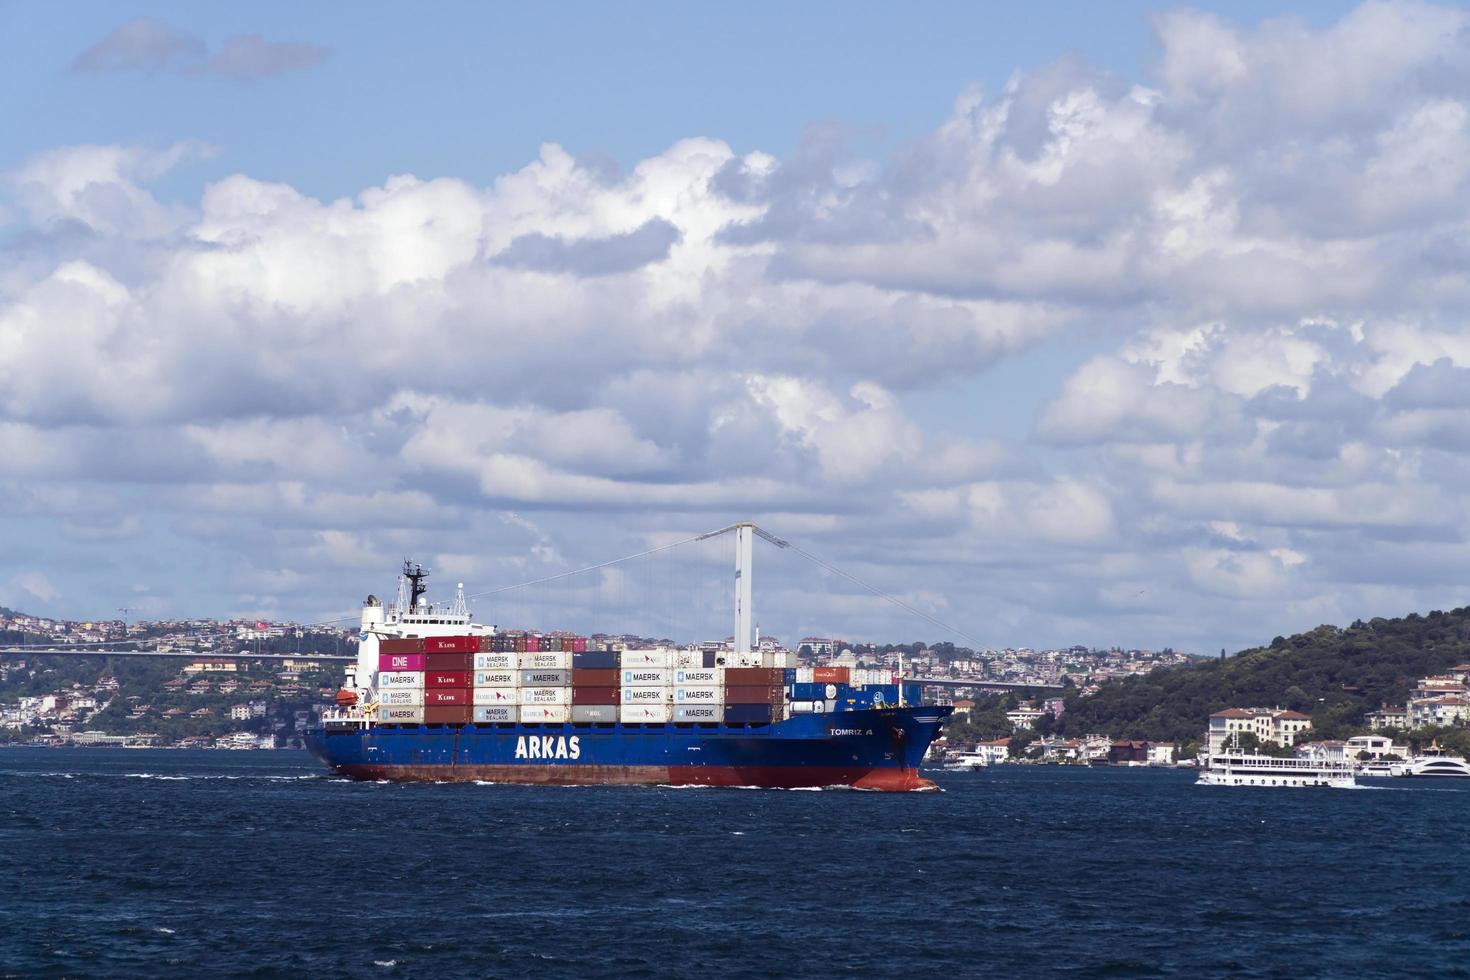 istanbul, turchia - 04 ago 2019 - nave portacontainer arkas tomriz foto